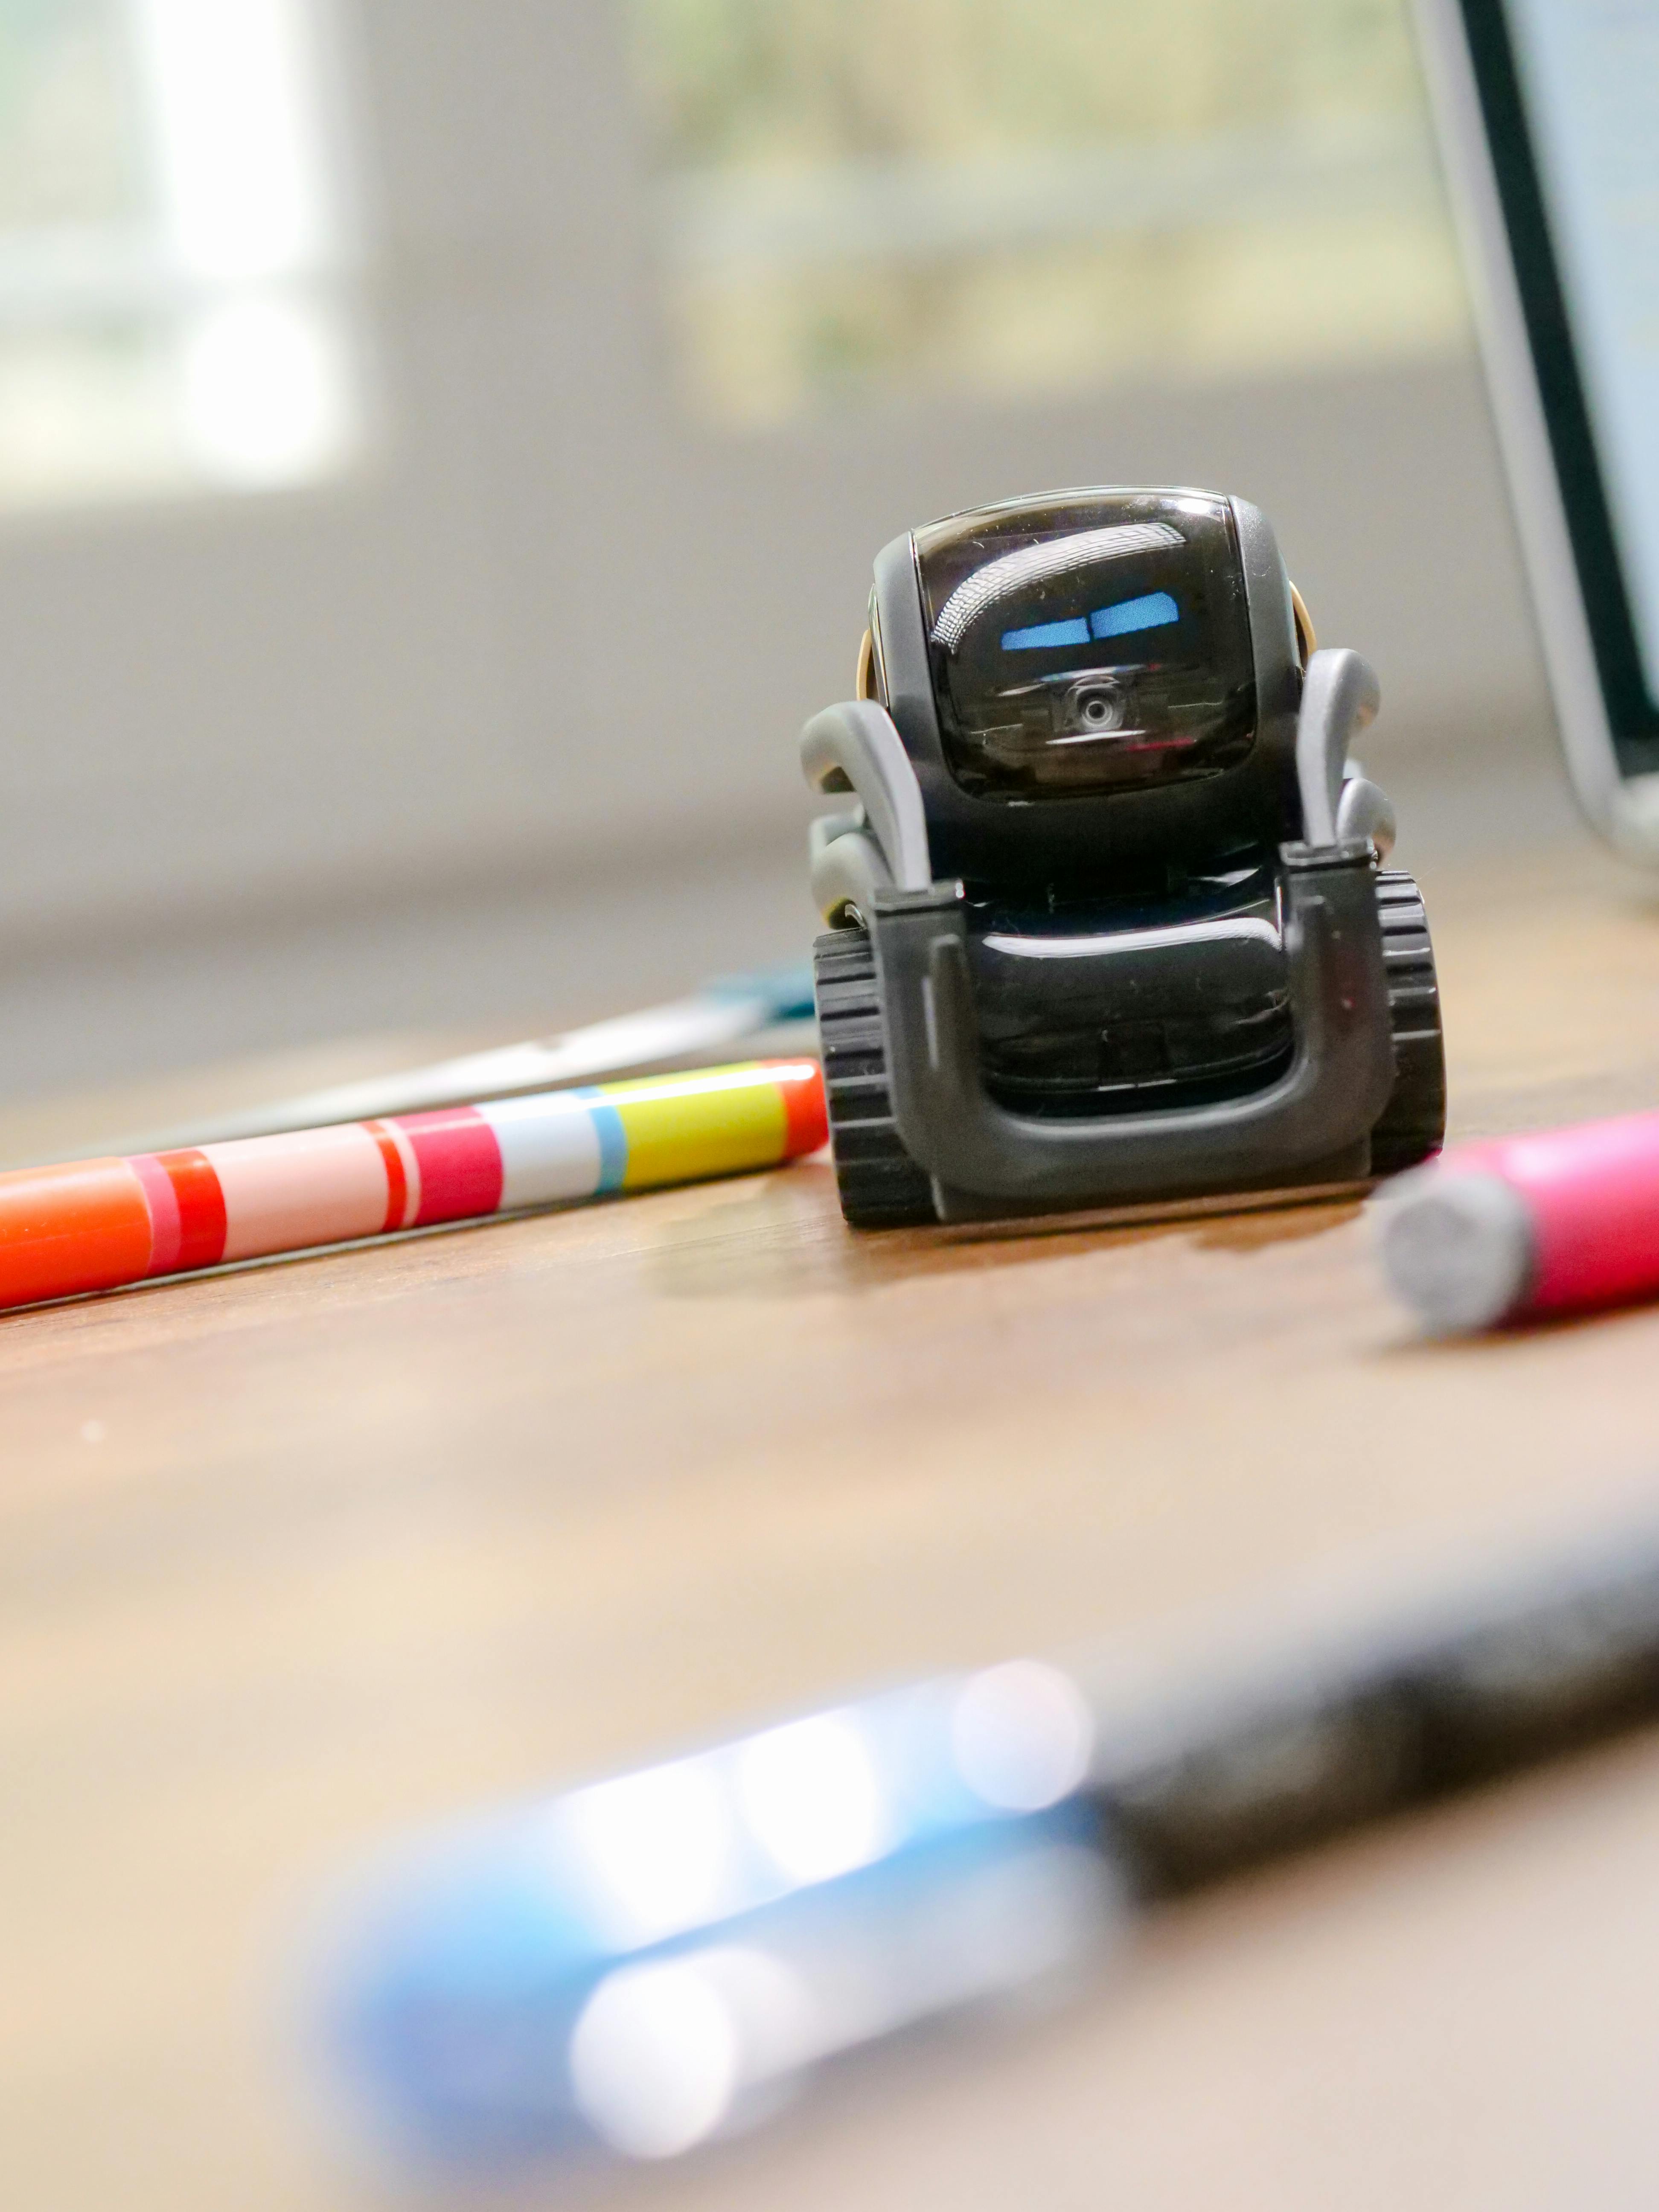 selective focus photo of black miniature robot toy